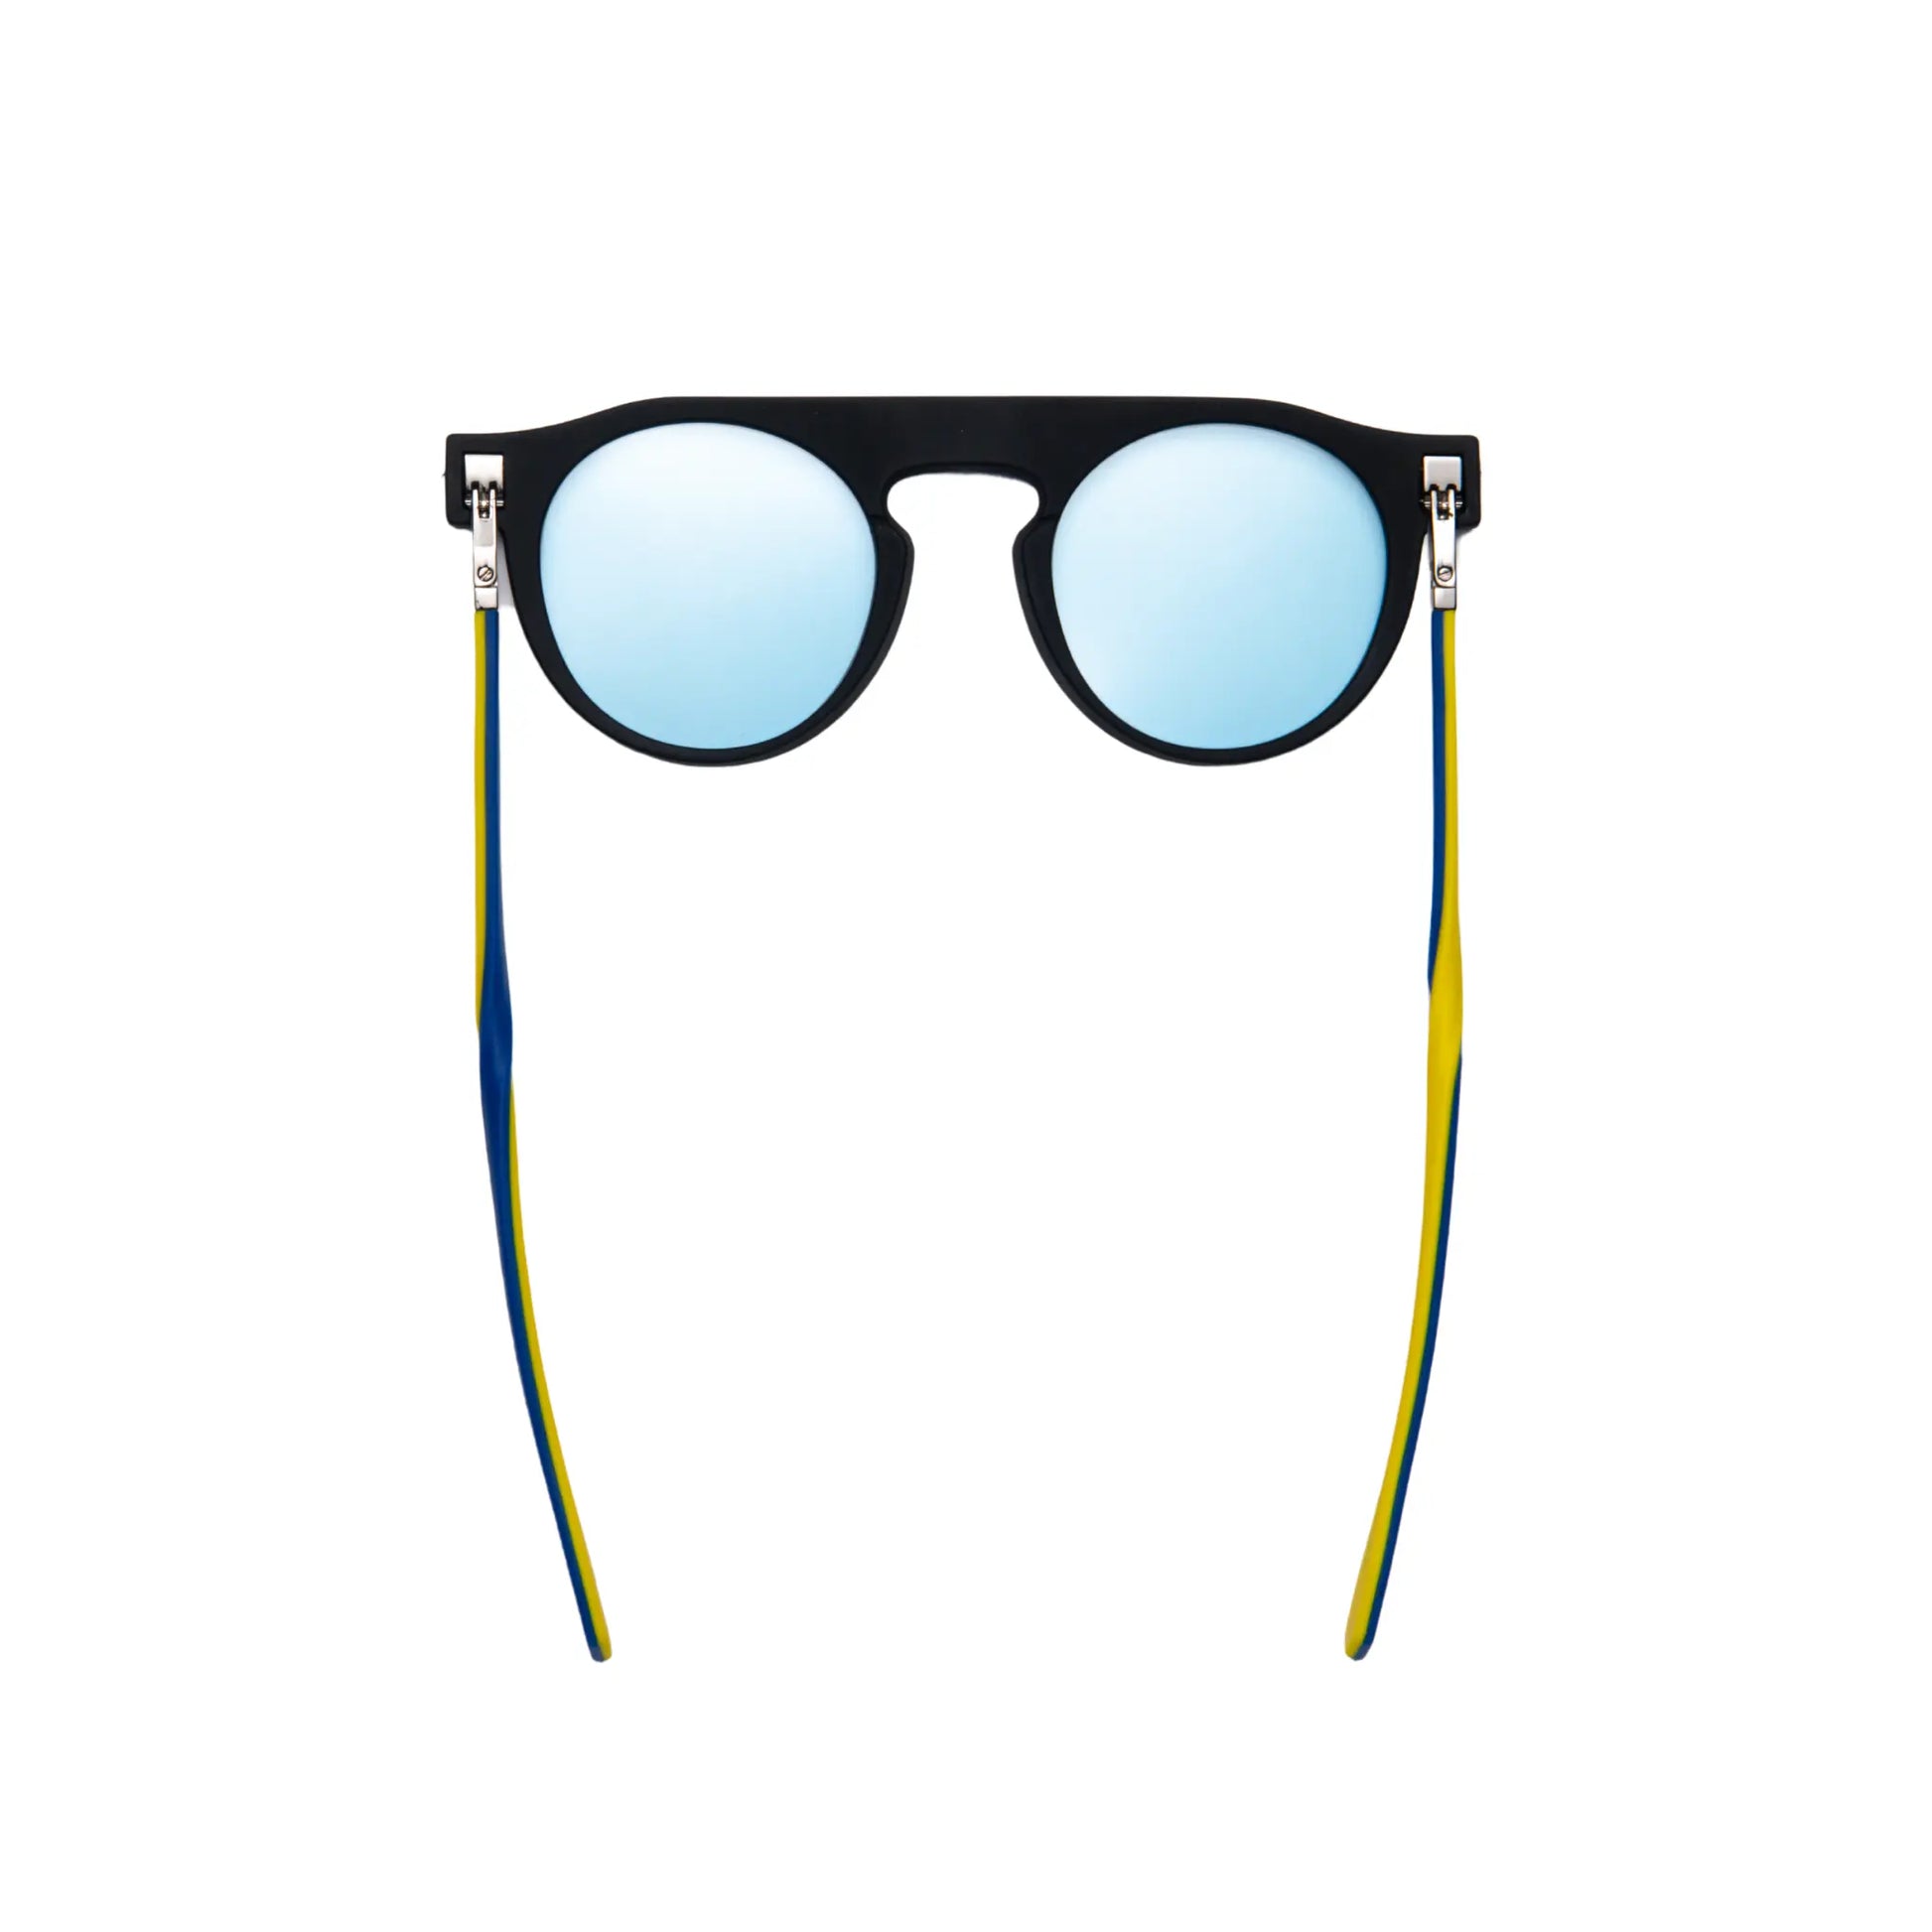 Reverso sunglasses black/Blue & yellow reversible & ultra light top view